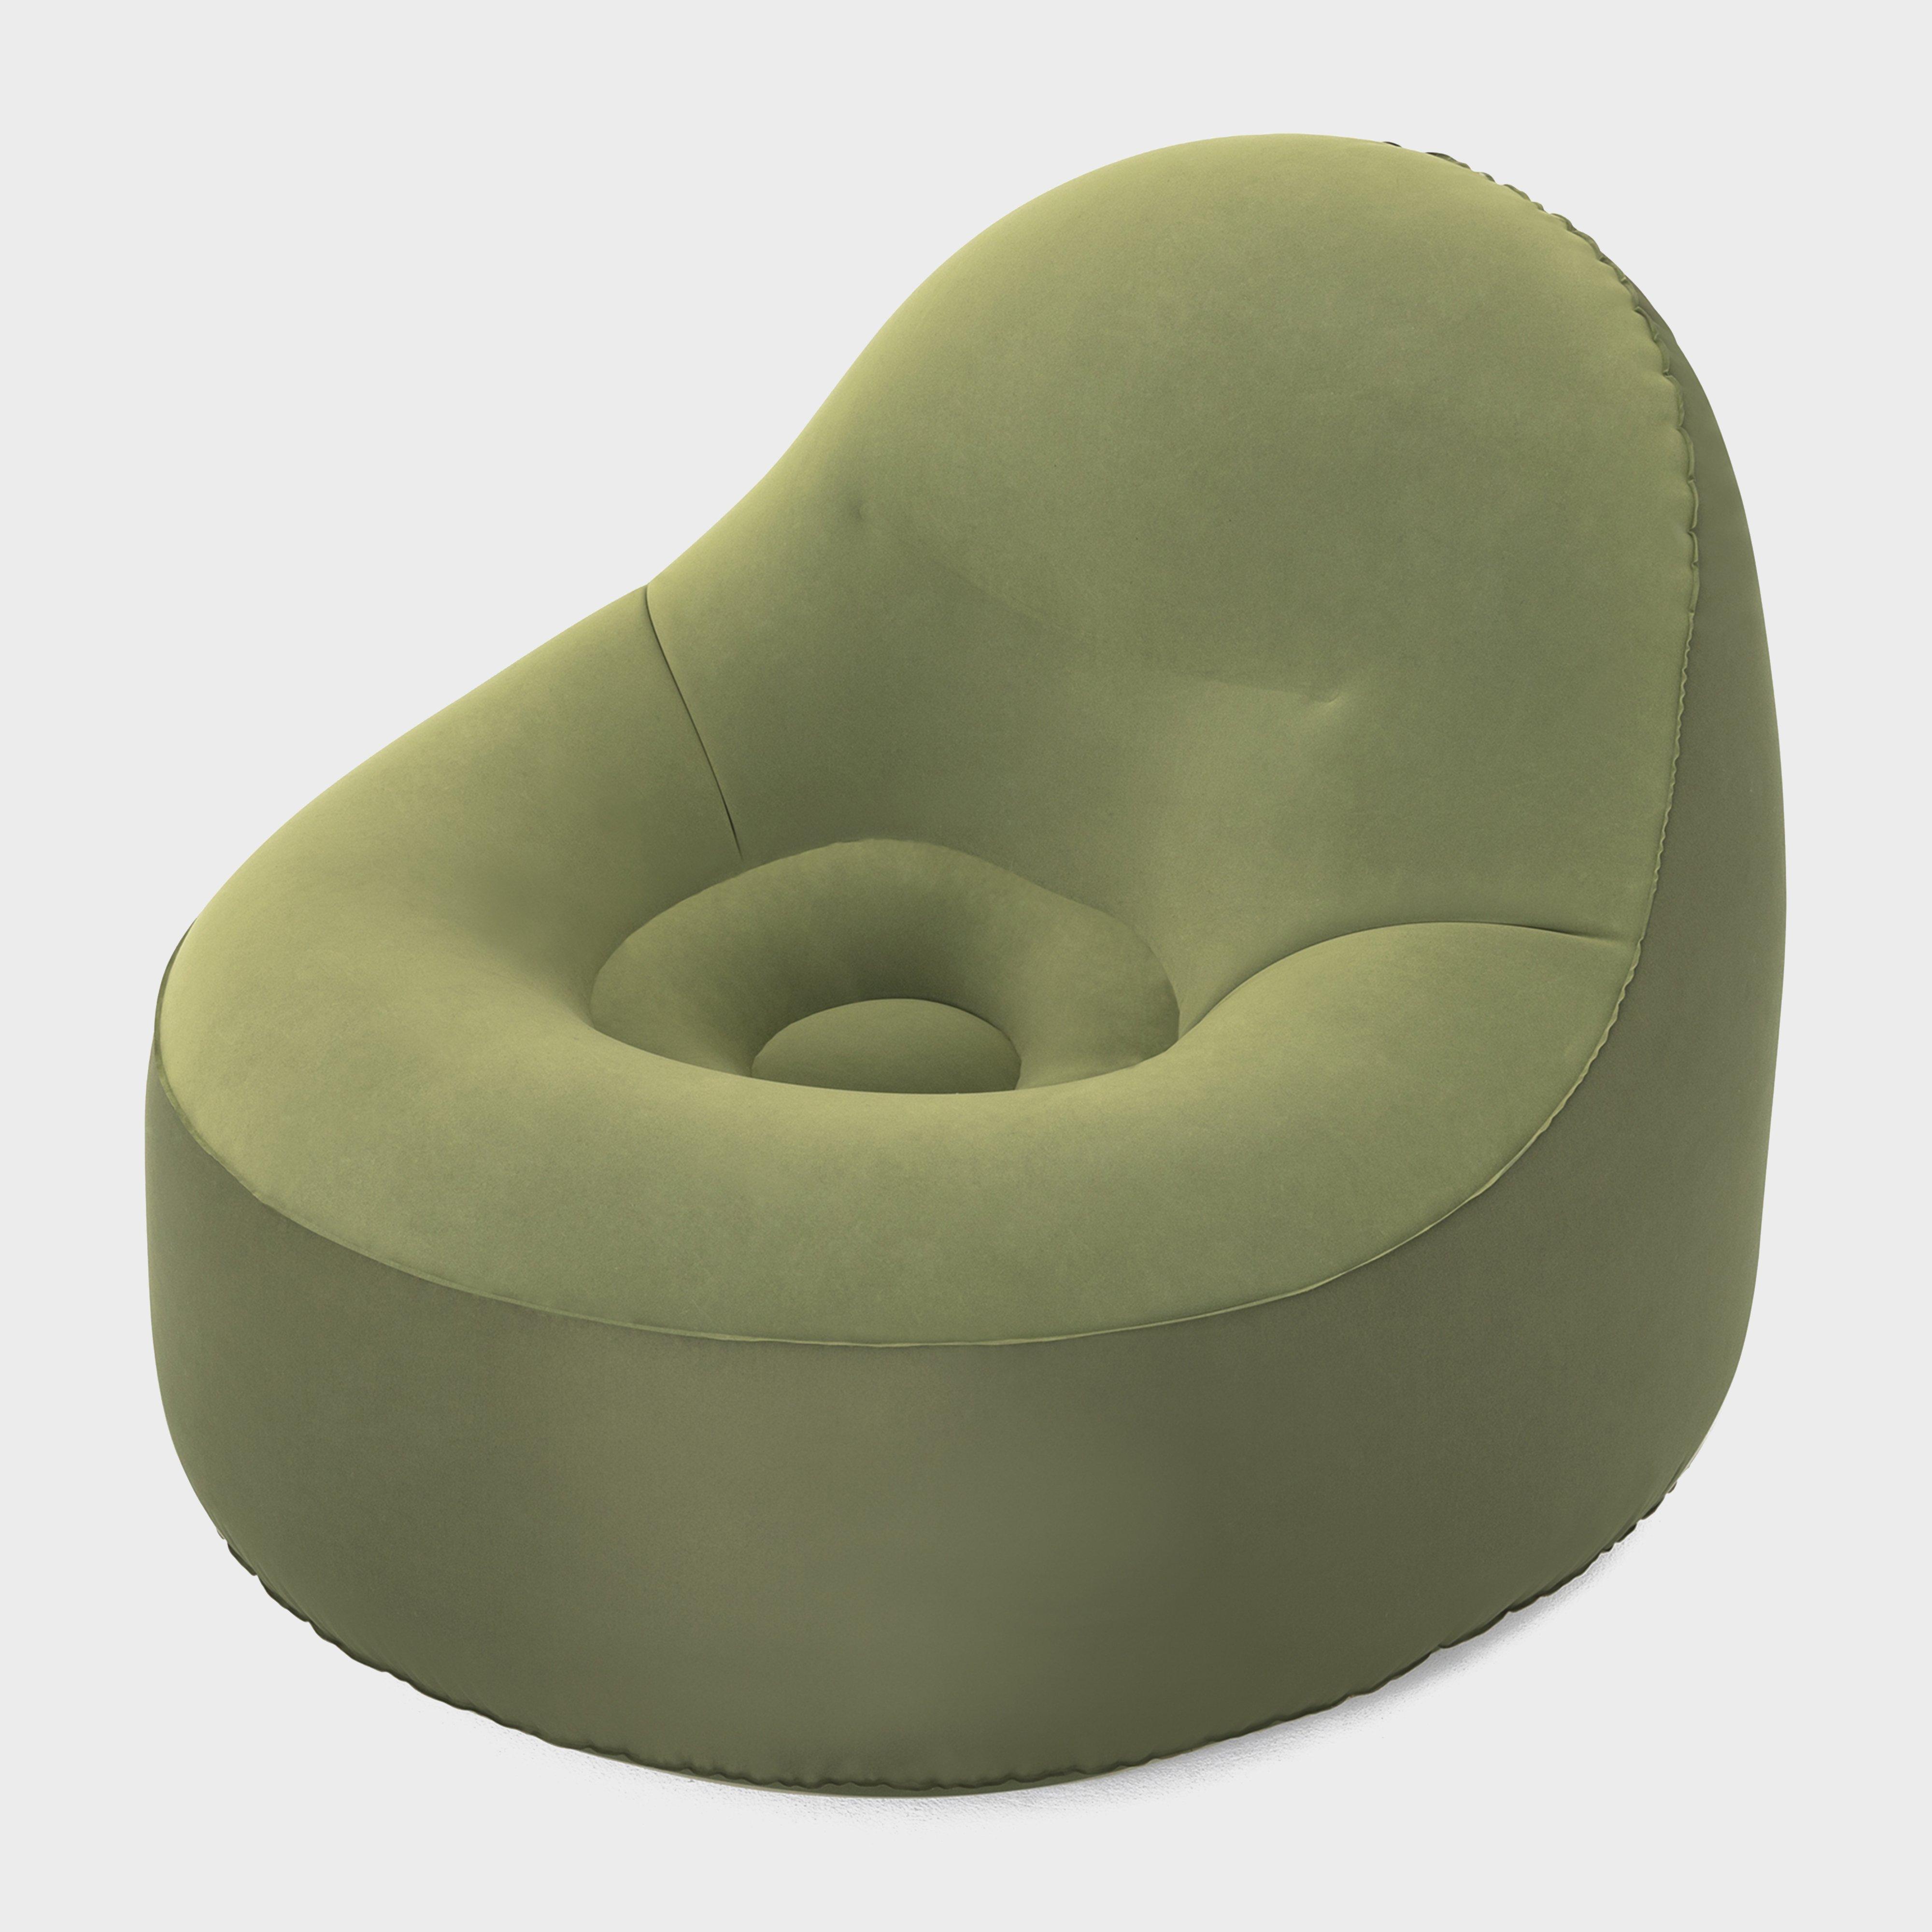 Hi-gear Inflatable Pod Chair - Green/grn  Green/grn